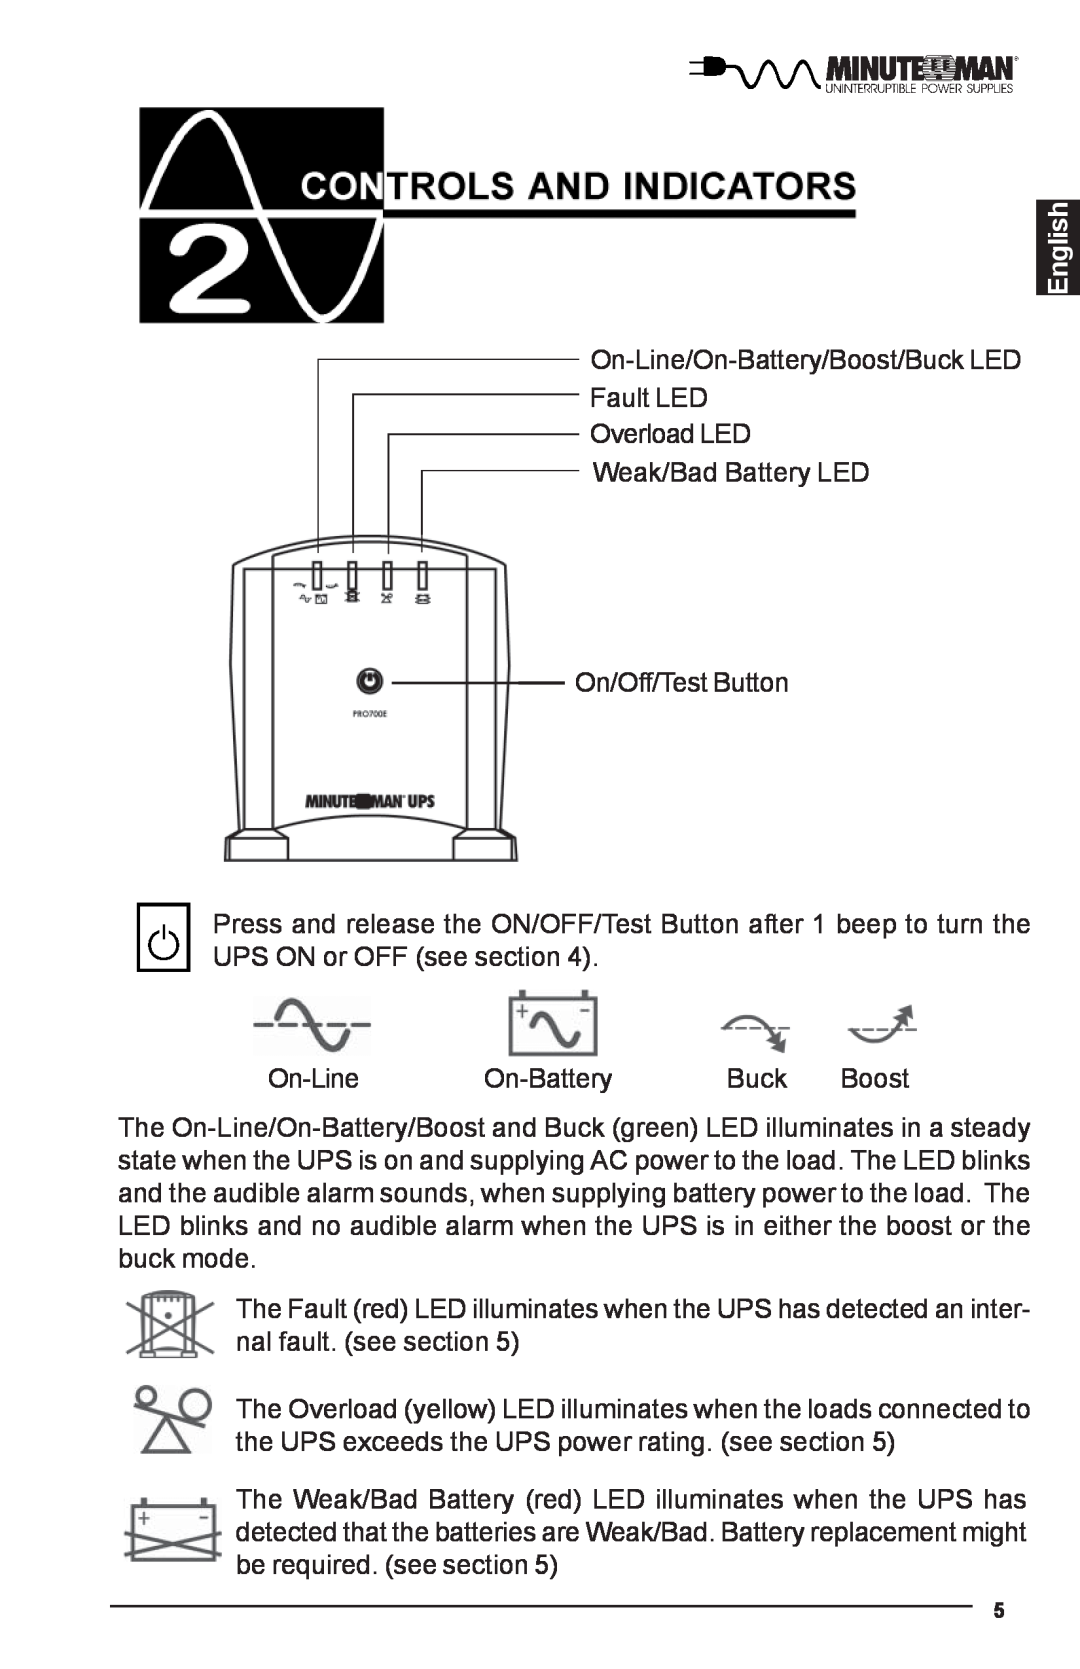 Minuteman UPS PRO-E user manual English, On-Line/On-Battery/Boost/Buck LED Fault LED Overload LED 